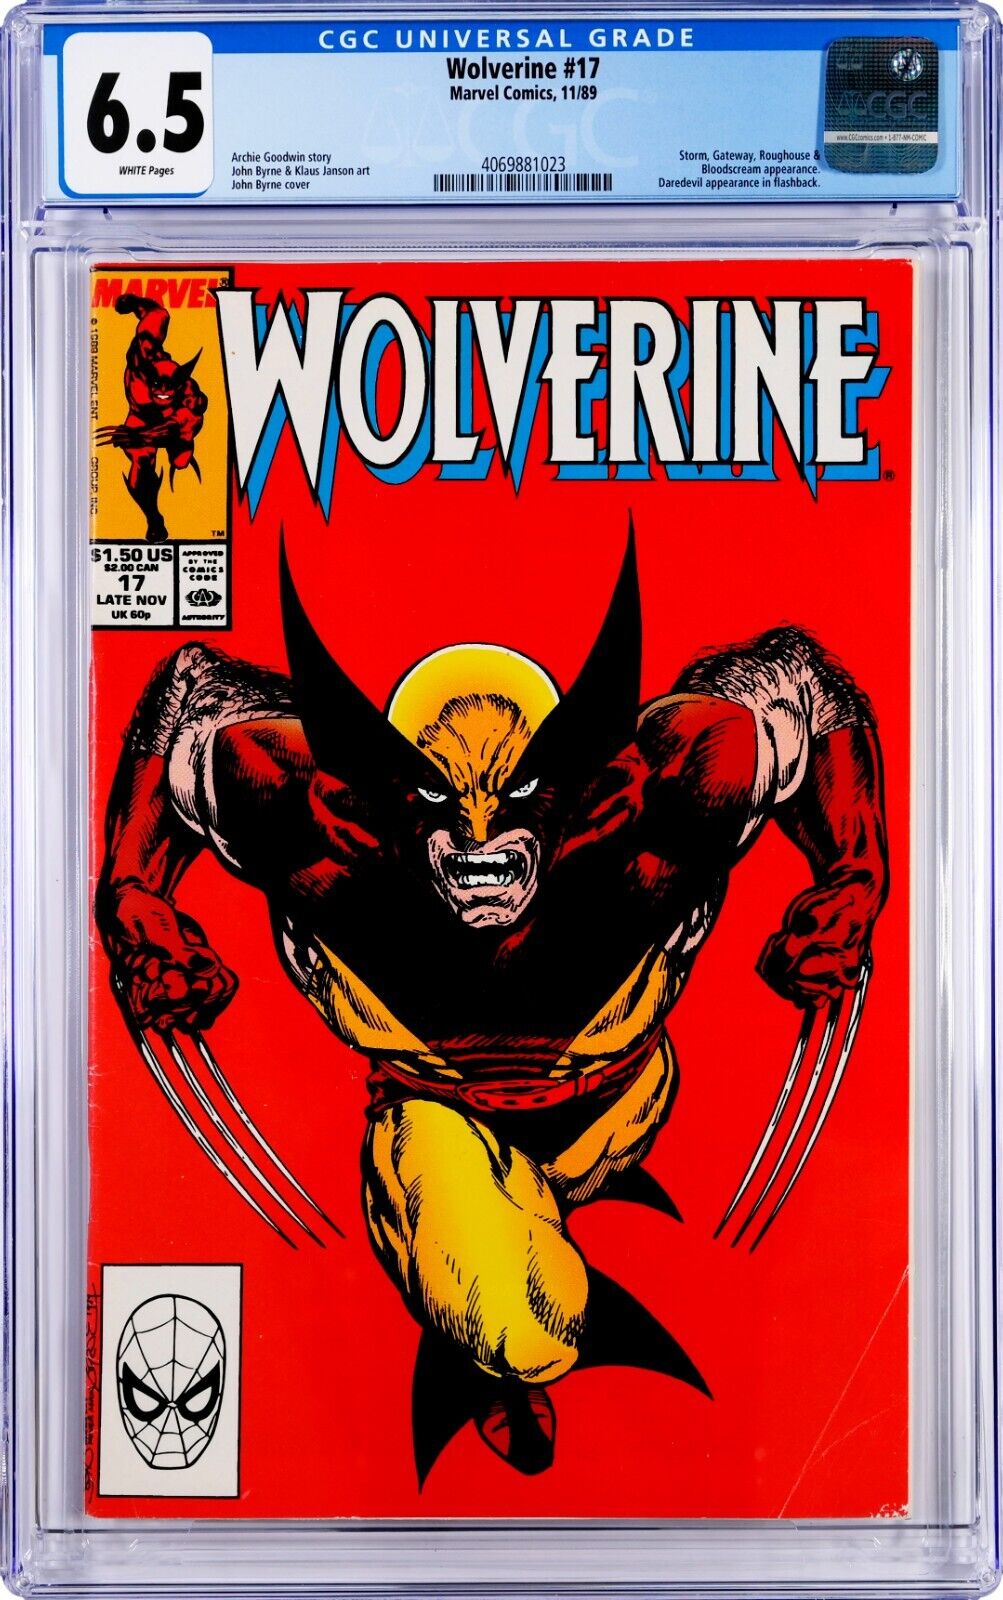 Wolverine #17 CGC 6.5 (Nov 1989, Marvel) Iconic cover art by John Byrne, Storm